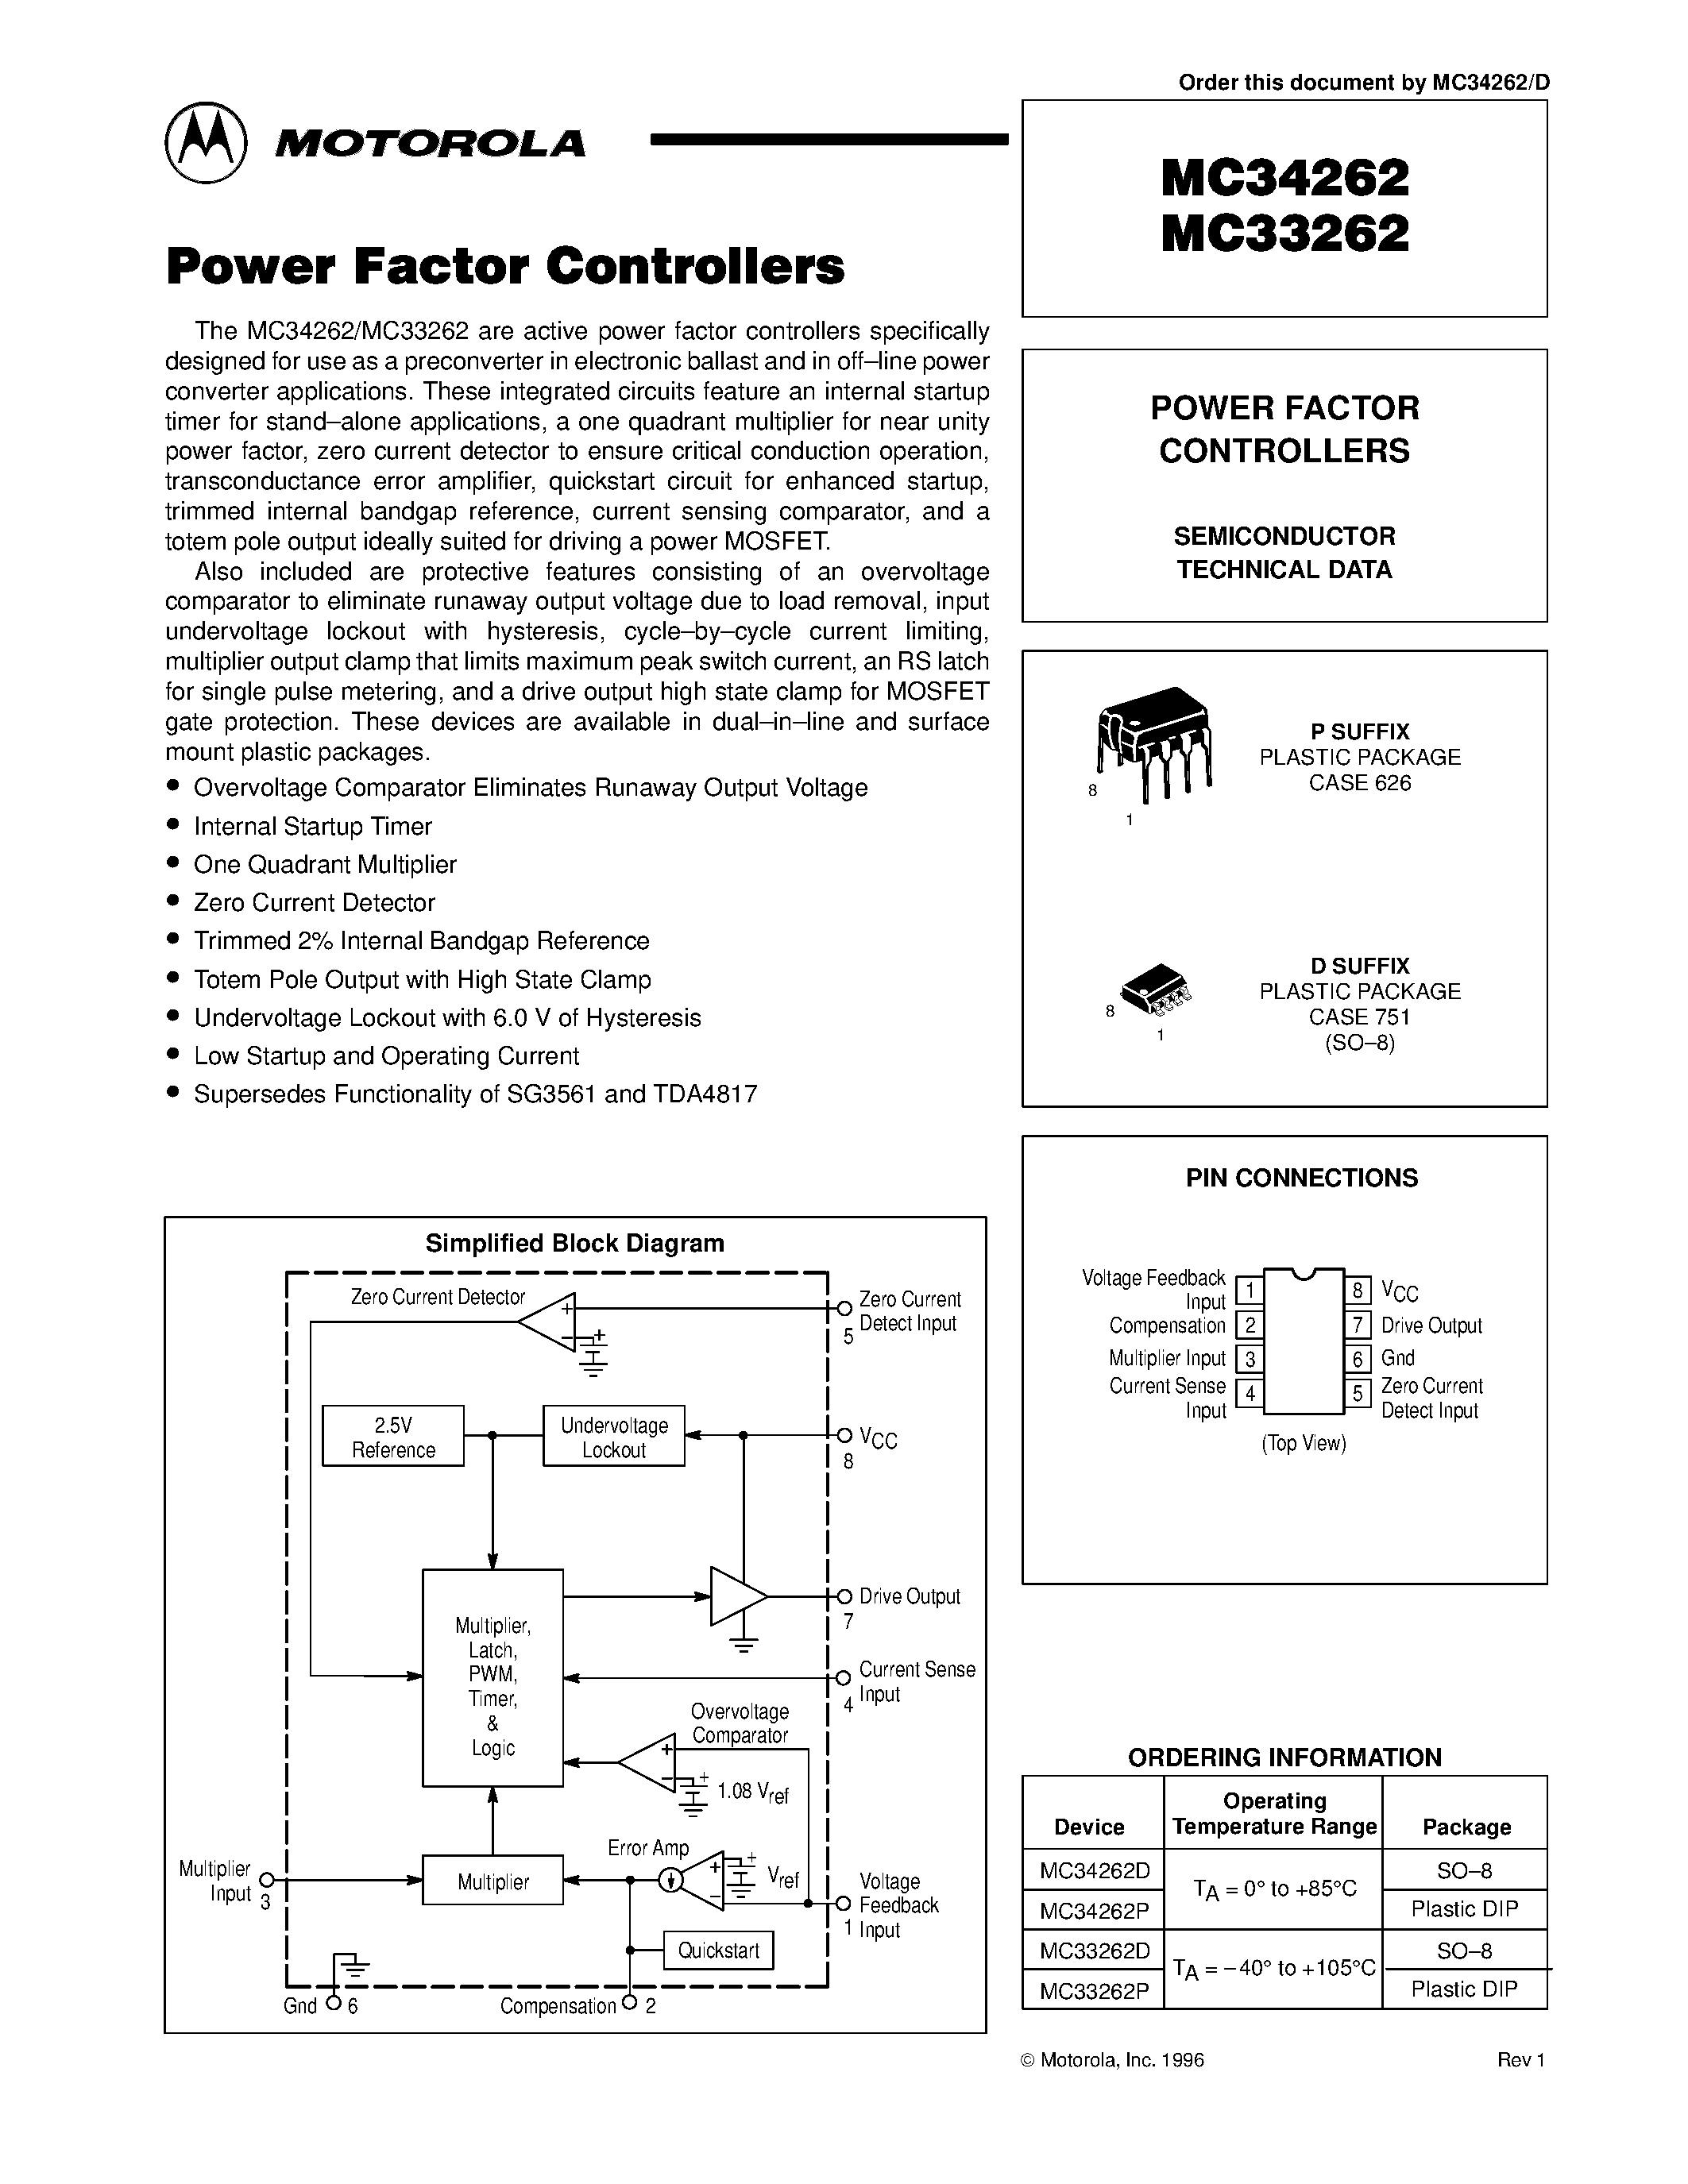 Datasheet MC33262 - (MC33262 / MC34262) POWER FACTOR CONTROLLERS page 1